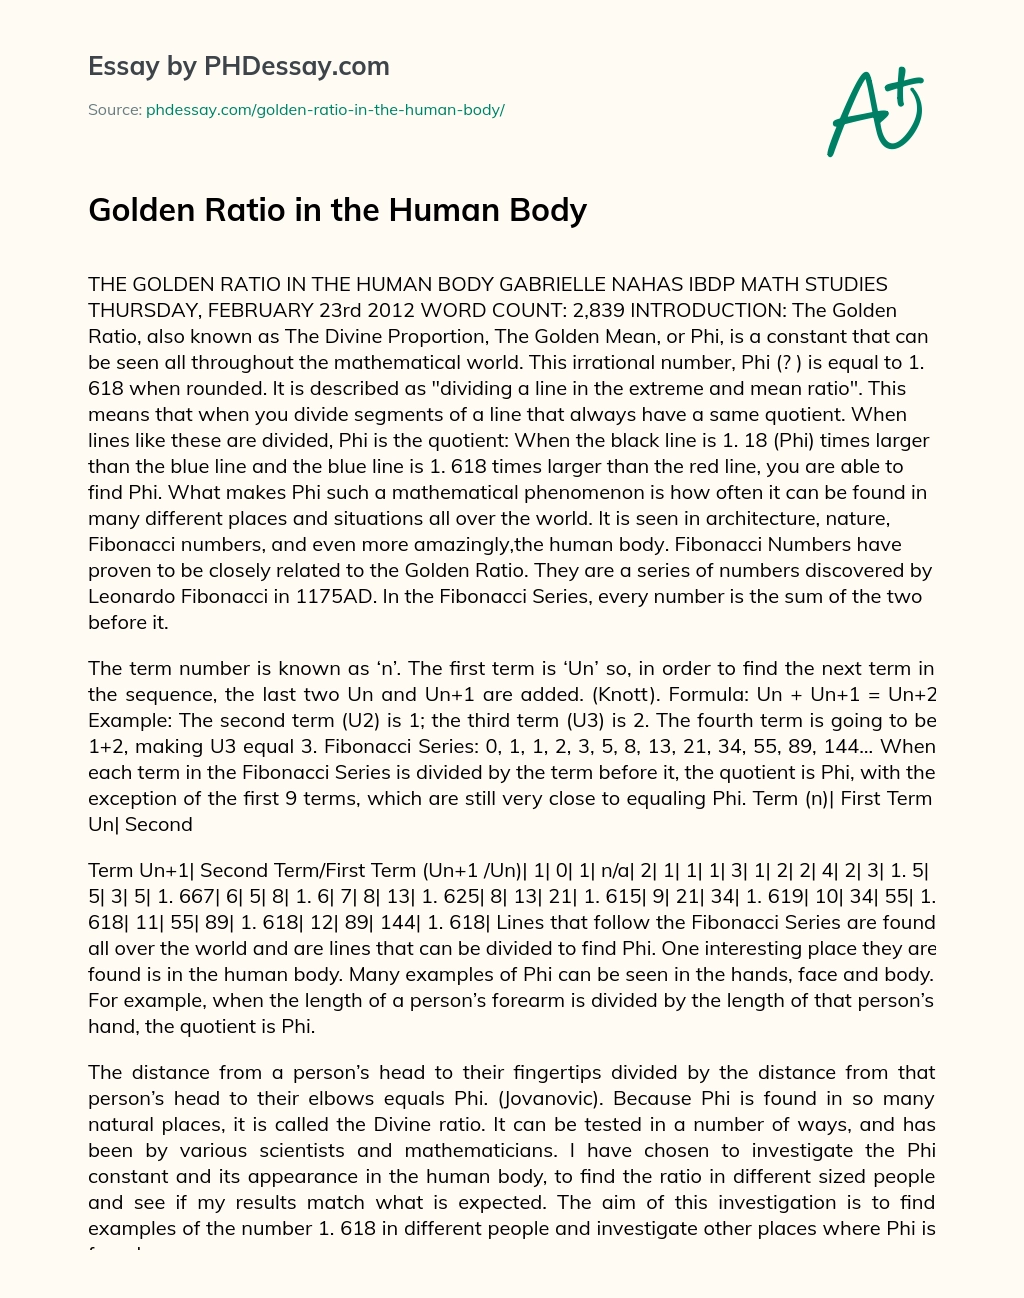 Golden Ratio in the Human Body essay